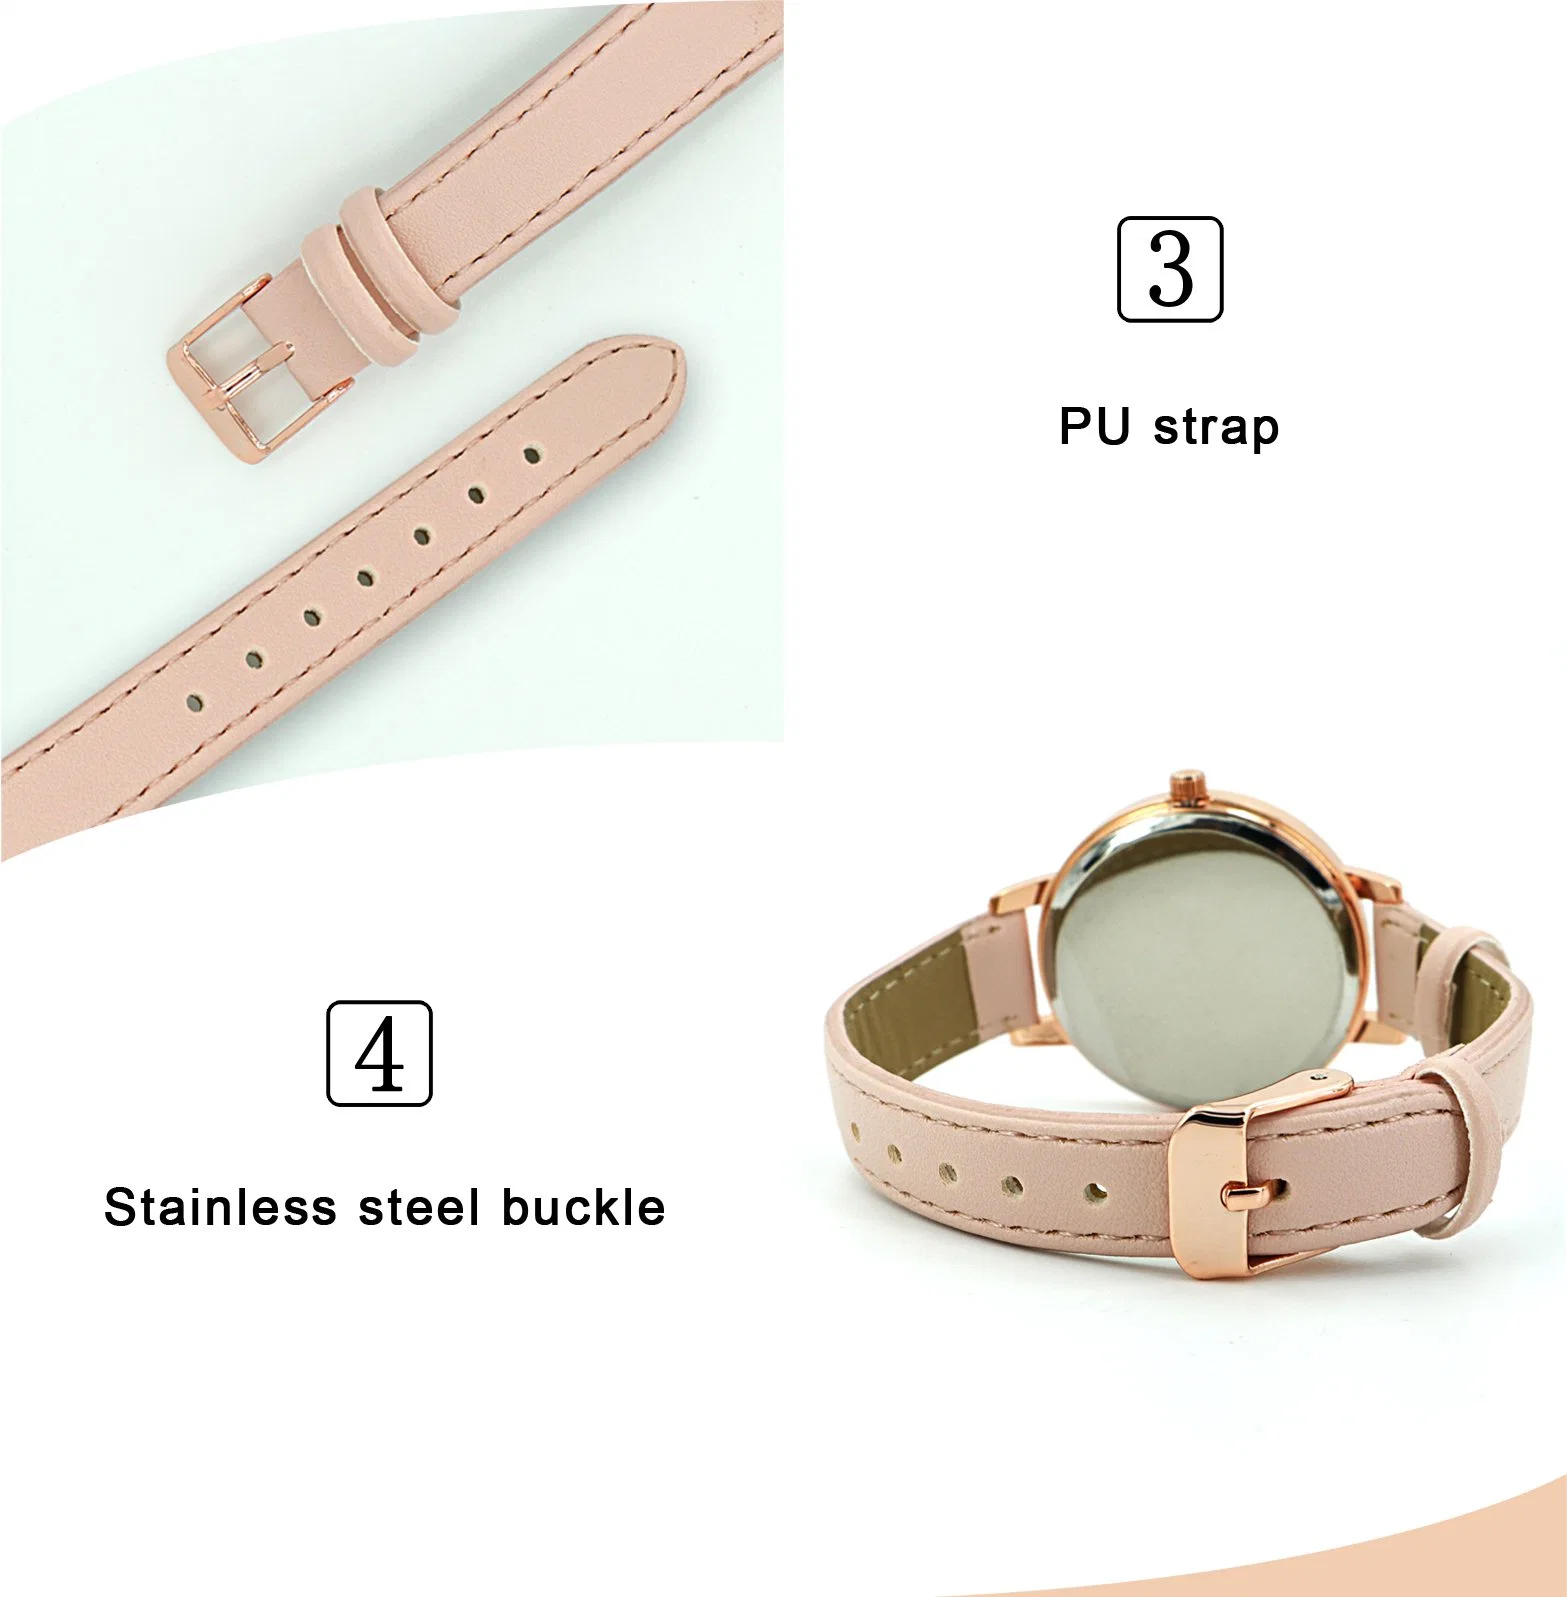 Promotion Alloy Wrist Watch Women Gift Quartz Lady Watch